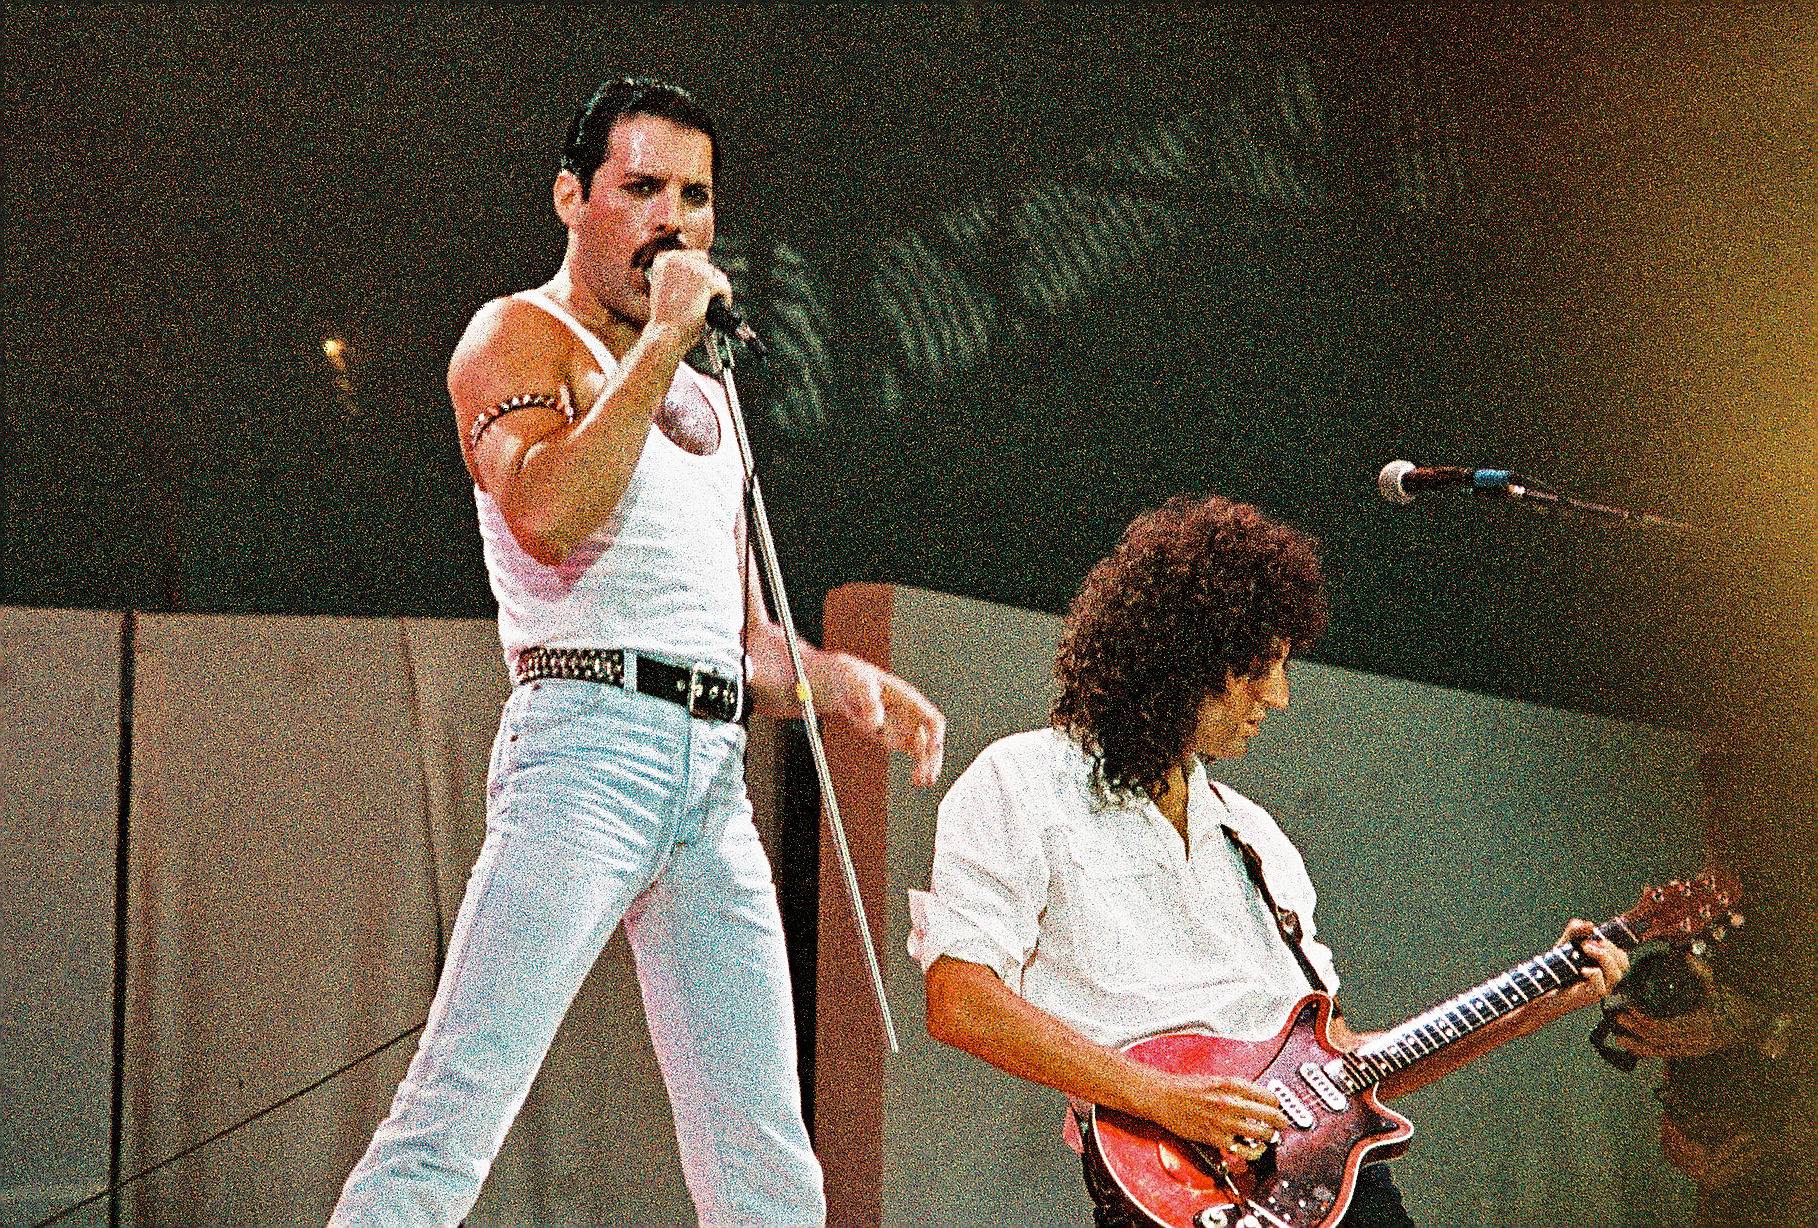 Queen's Freddie Mercury wearing a white shirt